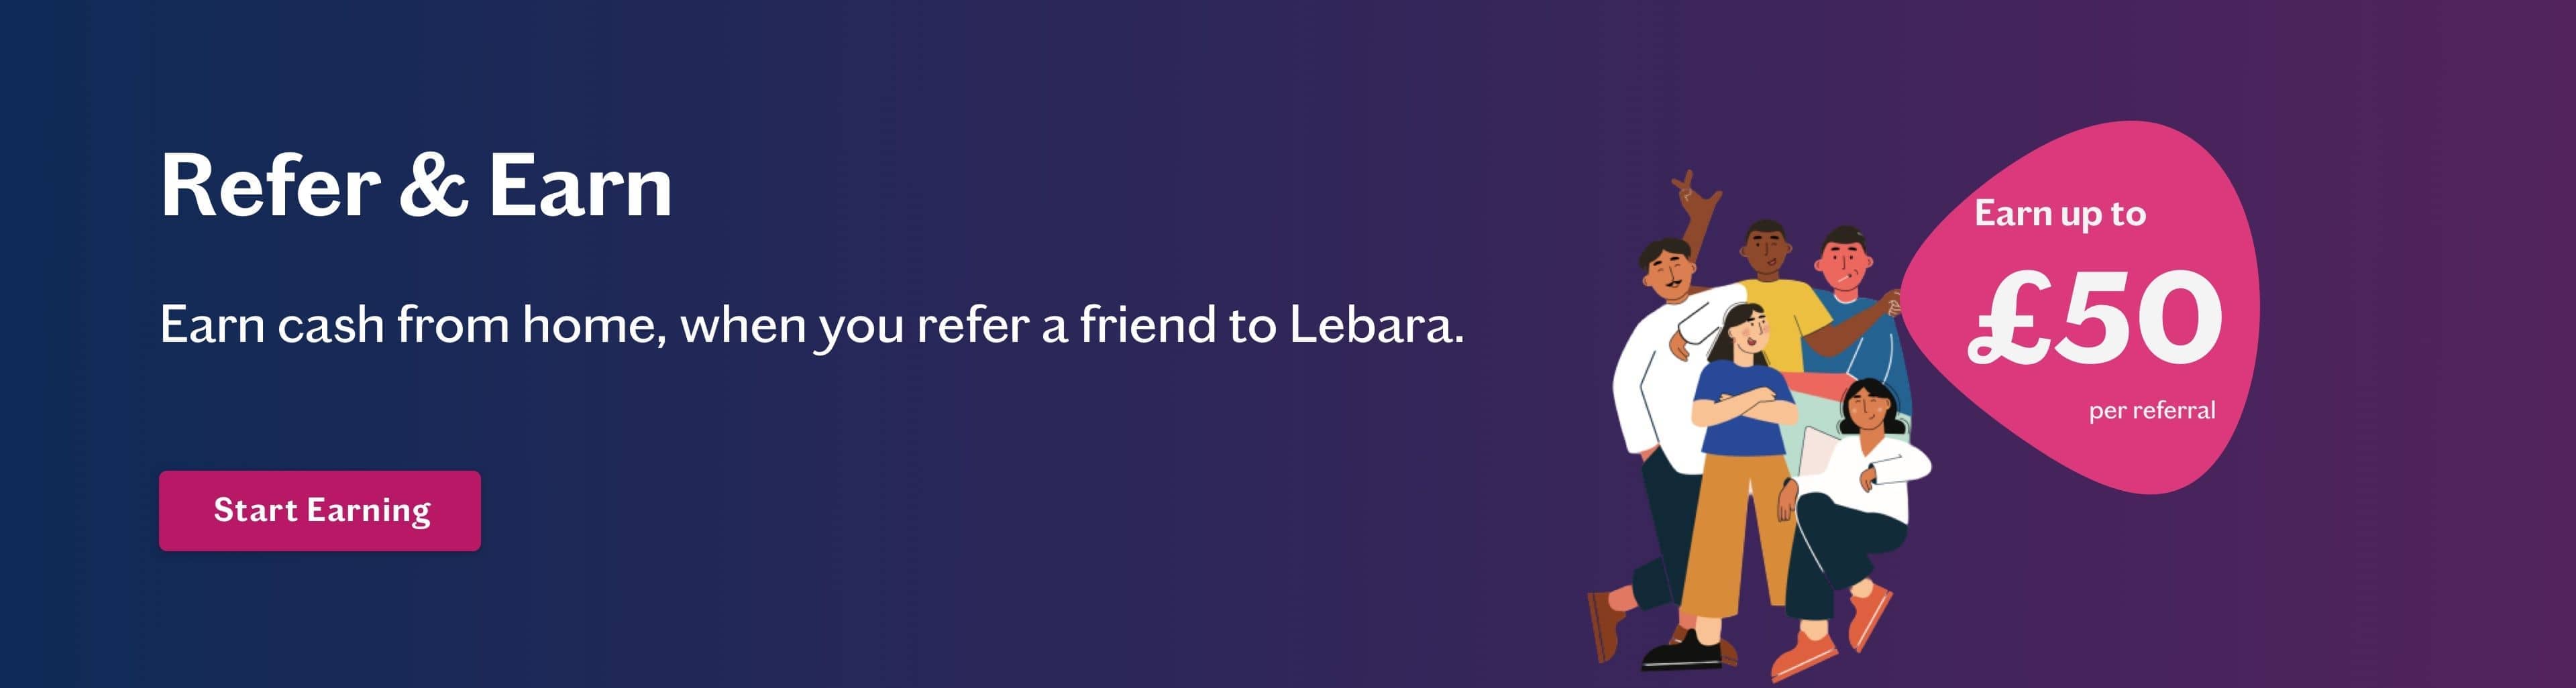 refer-a-friend-lebara